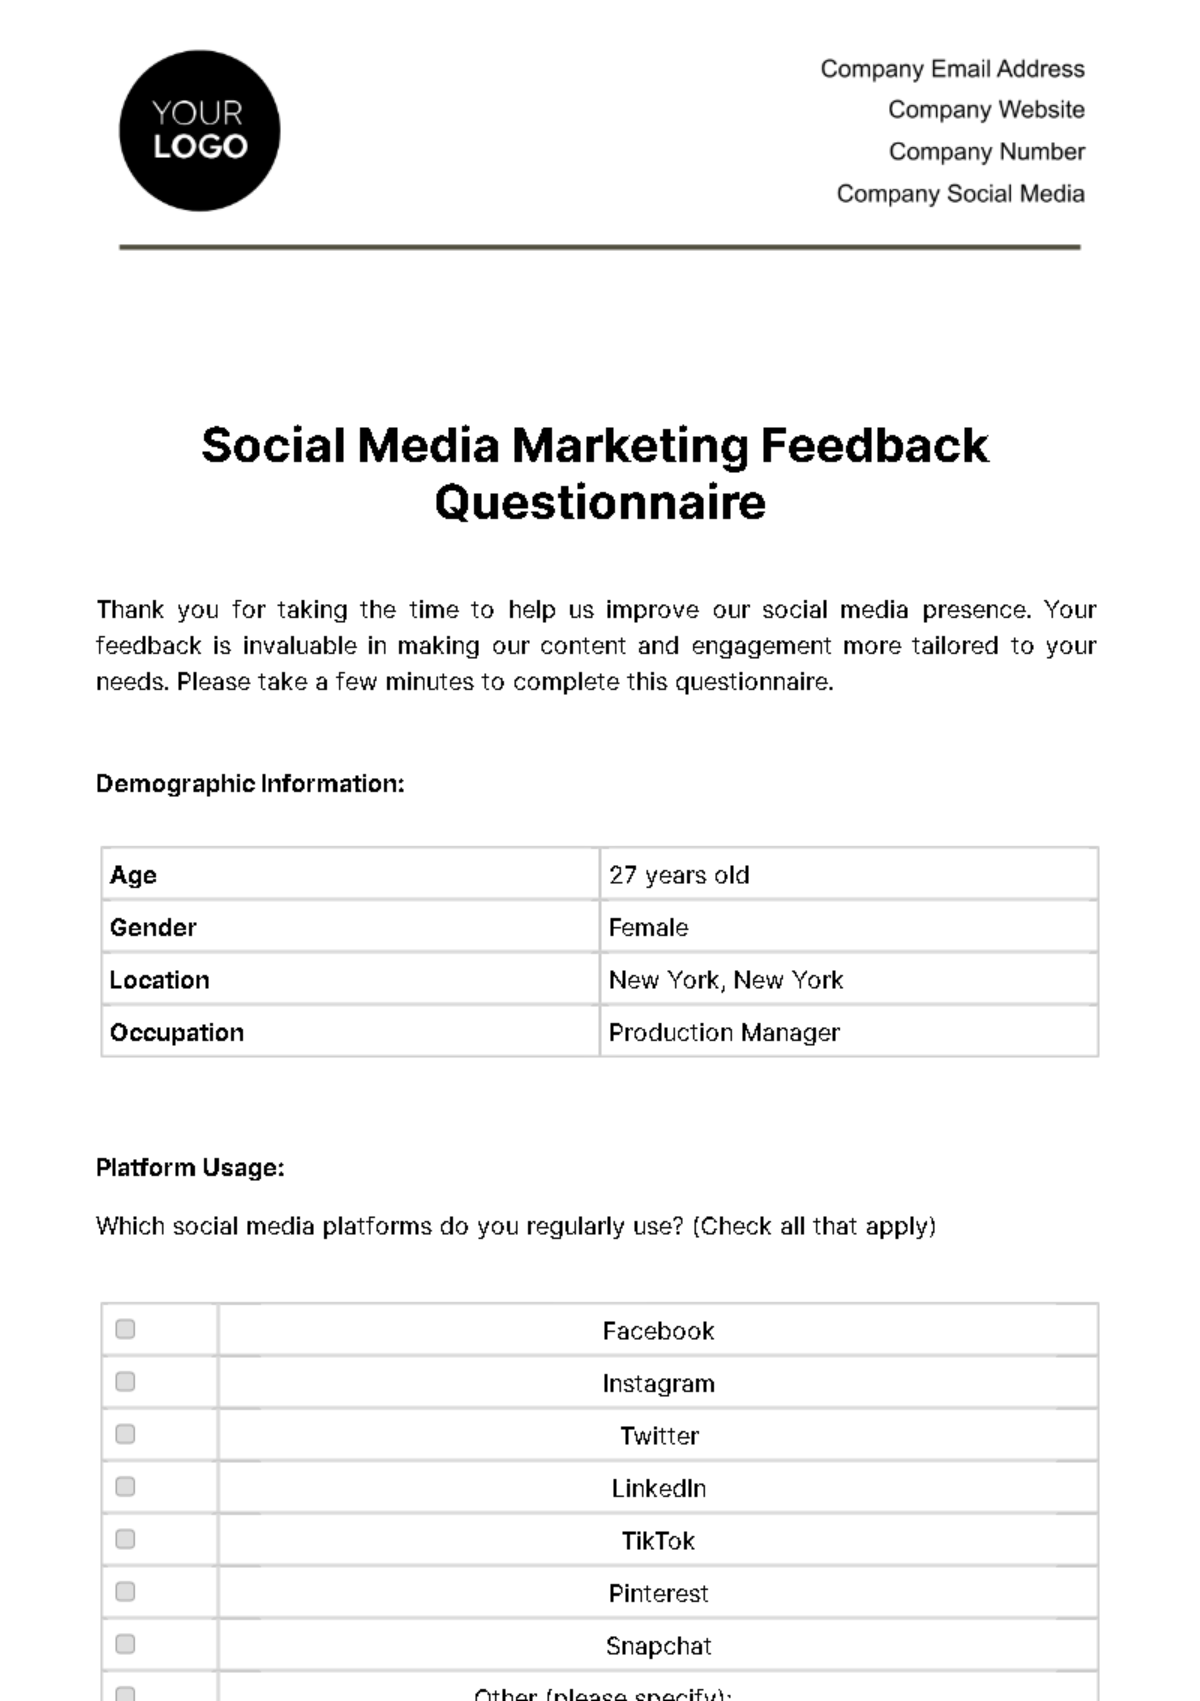 Social Media Marketing Feedback Questionnaire Template